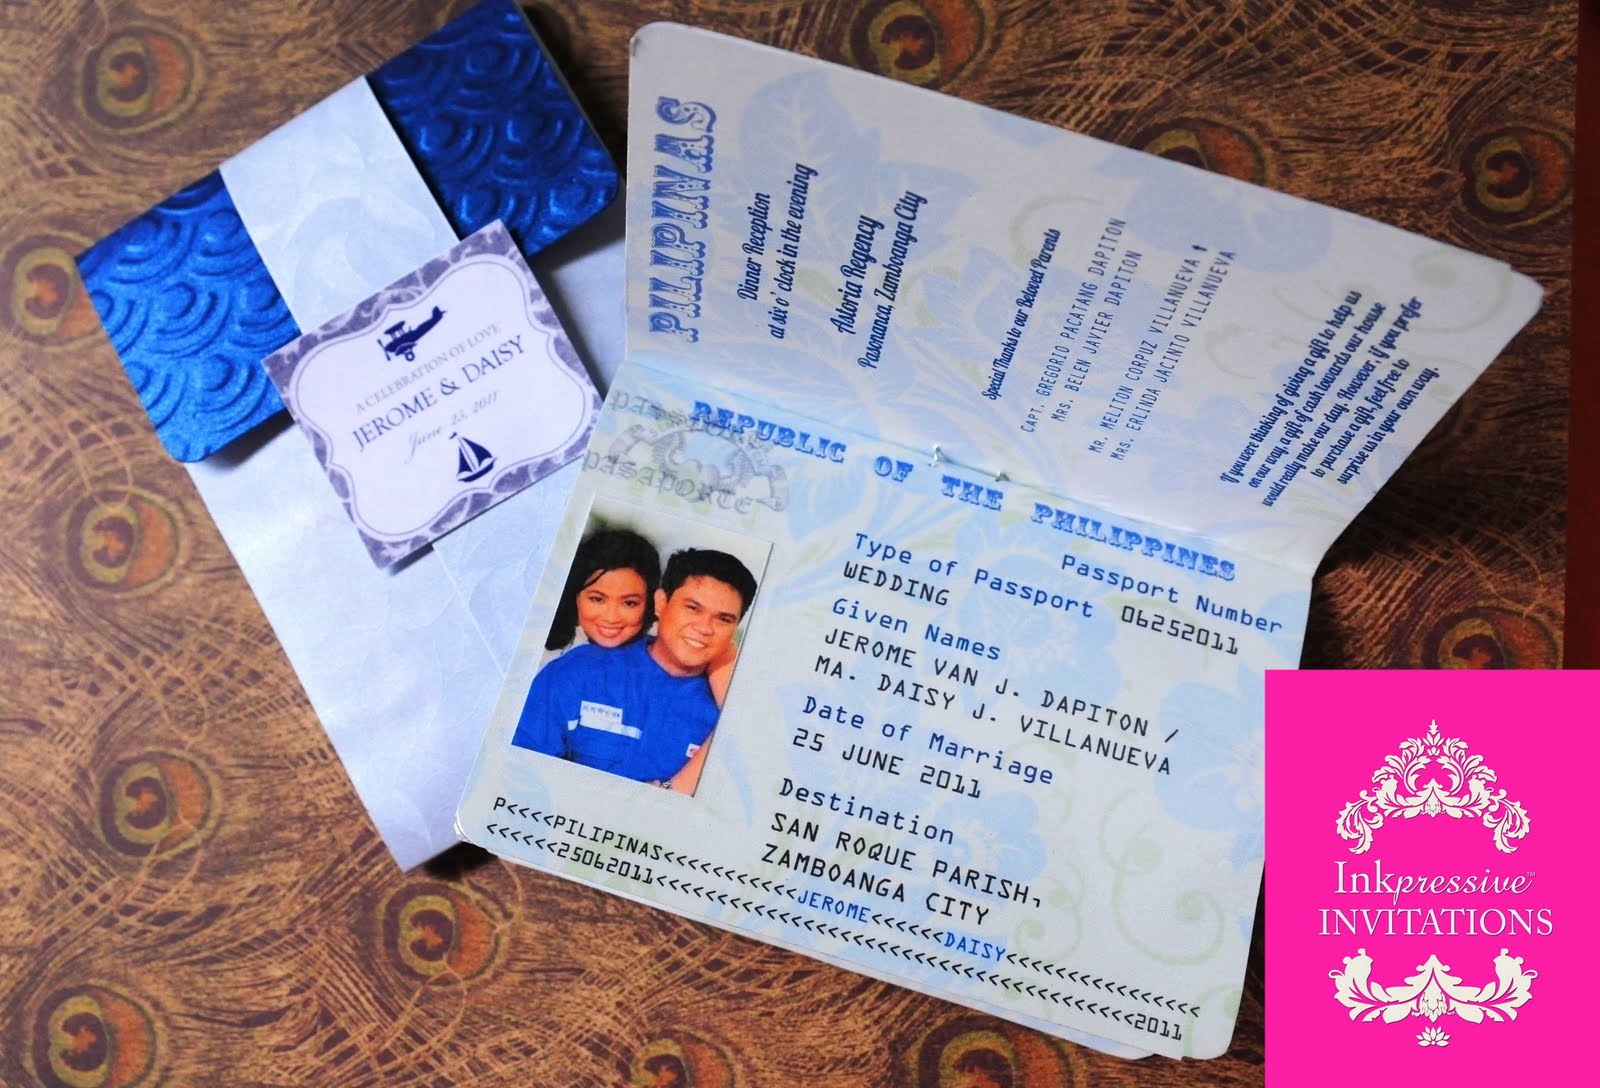 Inkpressive Invitations and Crafts: Passport Invitation - Blue and Silver